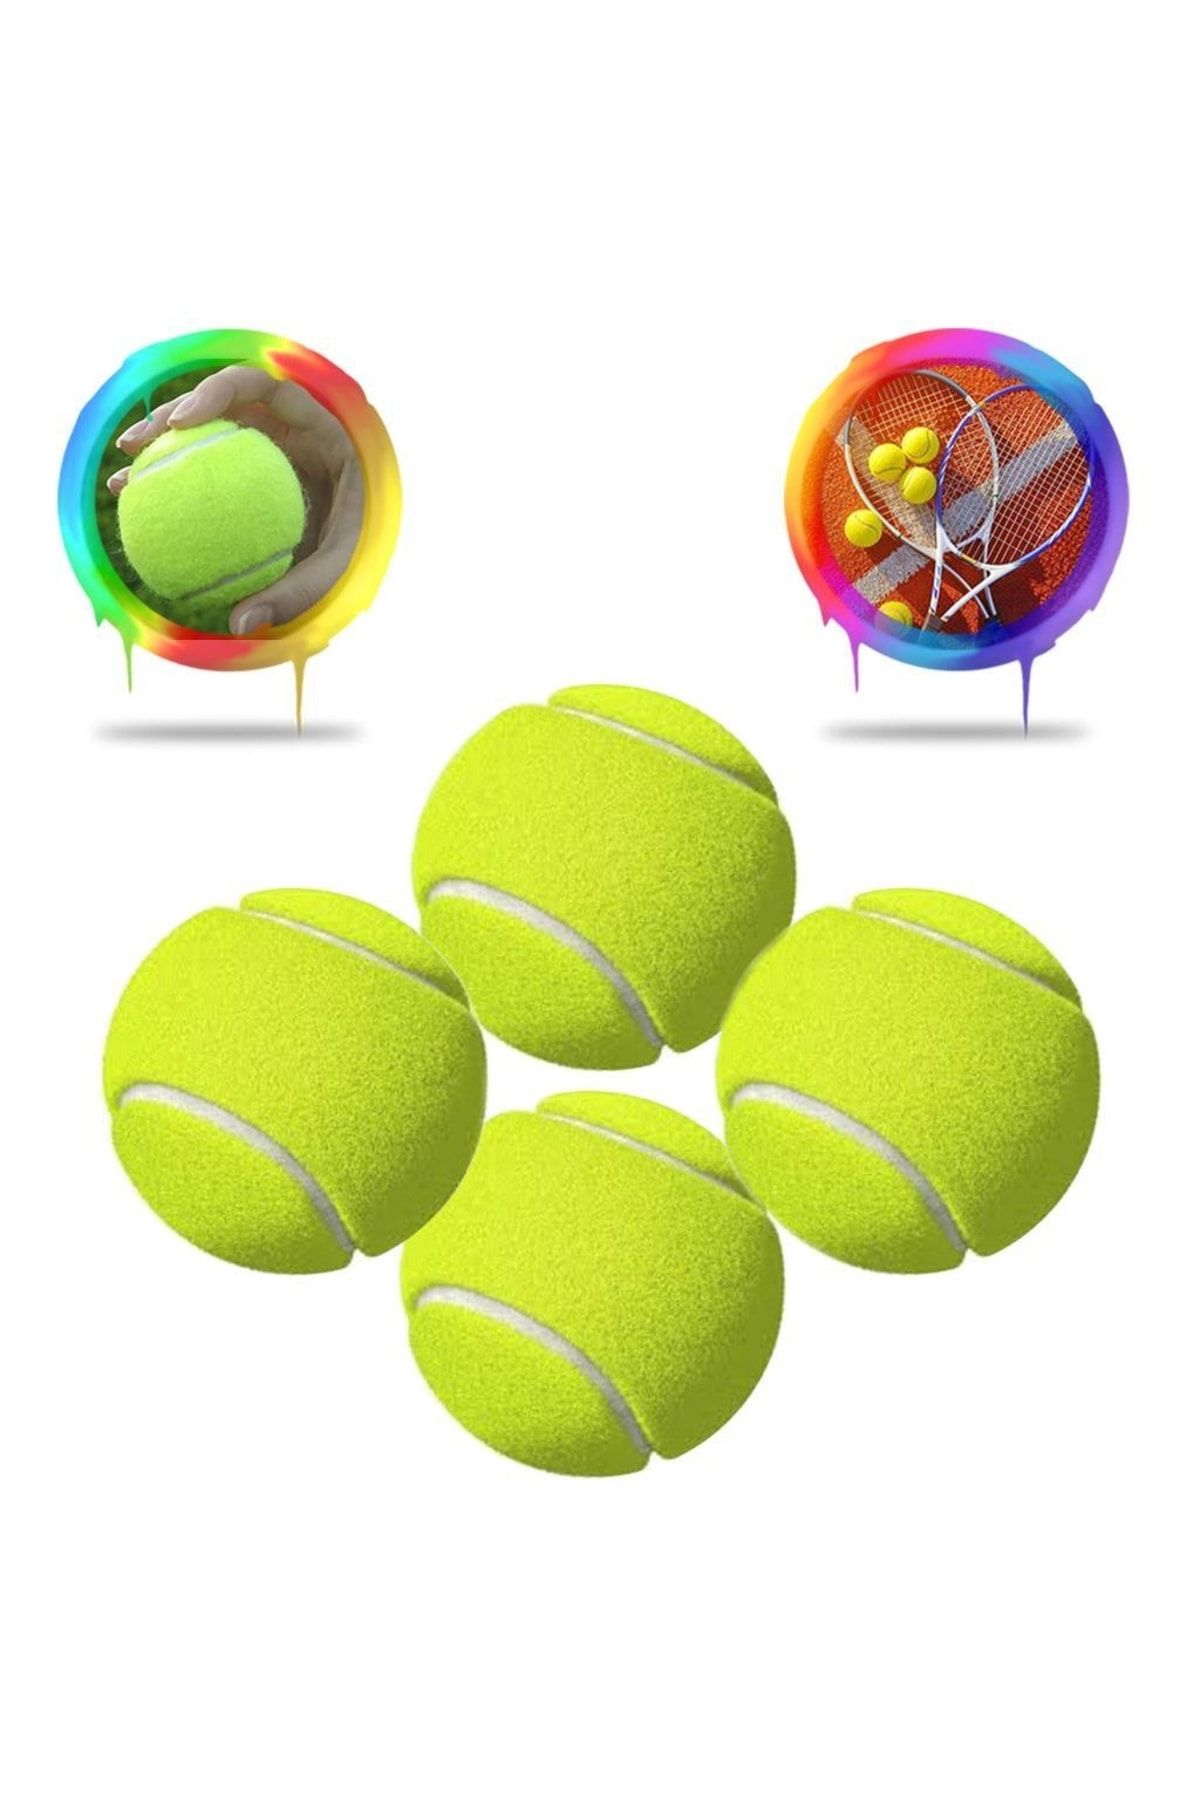 Mashotrend 4 Adet Sarı Tenis Topu - Antrenman Tenis Topu - Masaj Topu